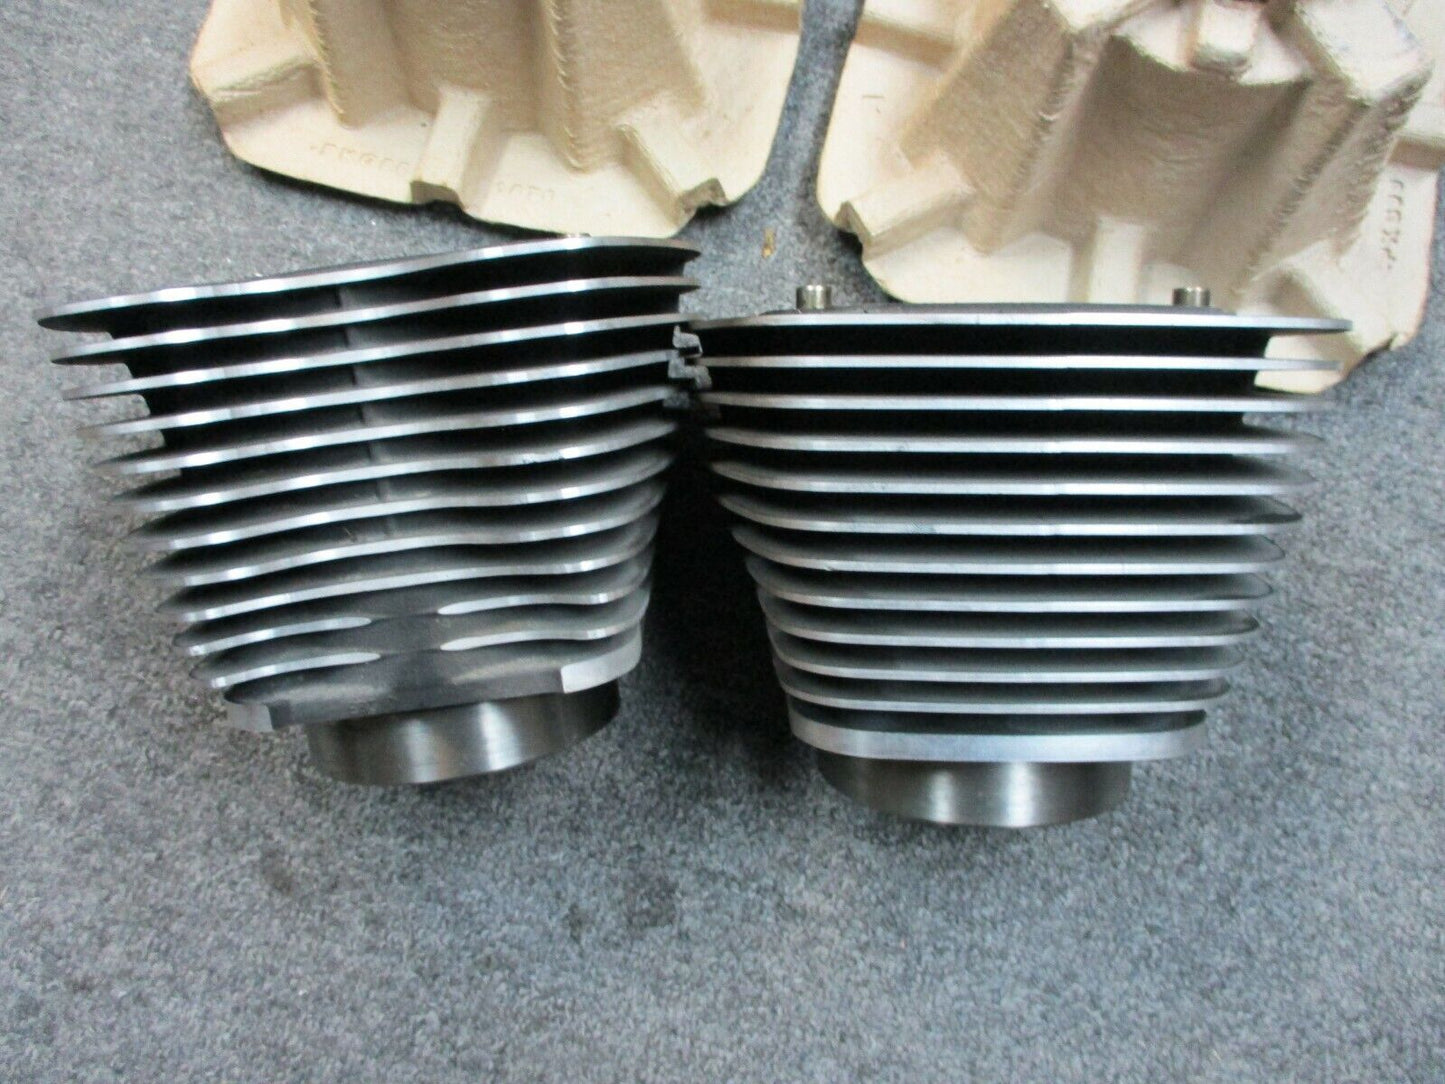 Harley Davidson OEM Cylinders 96 Softail, DYNA, FXDB 16800004